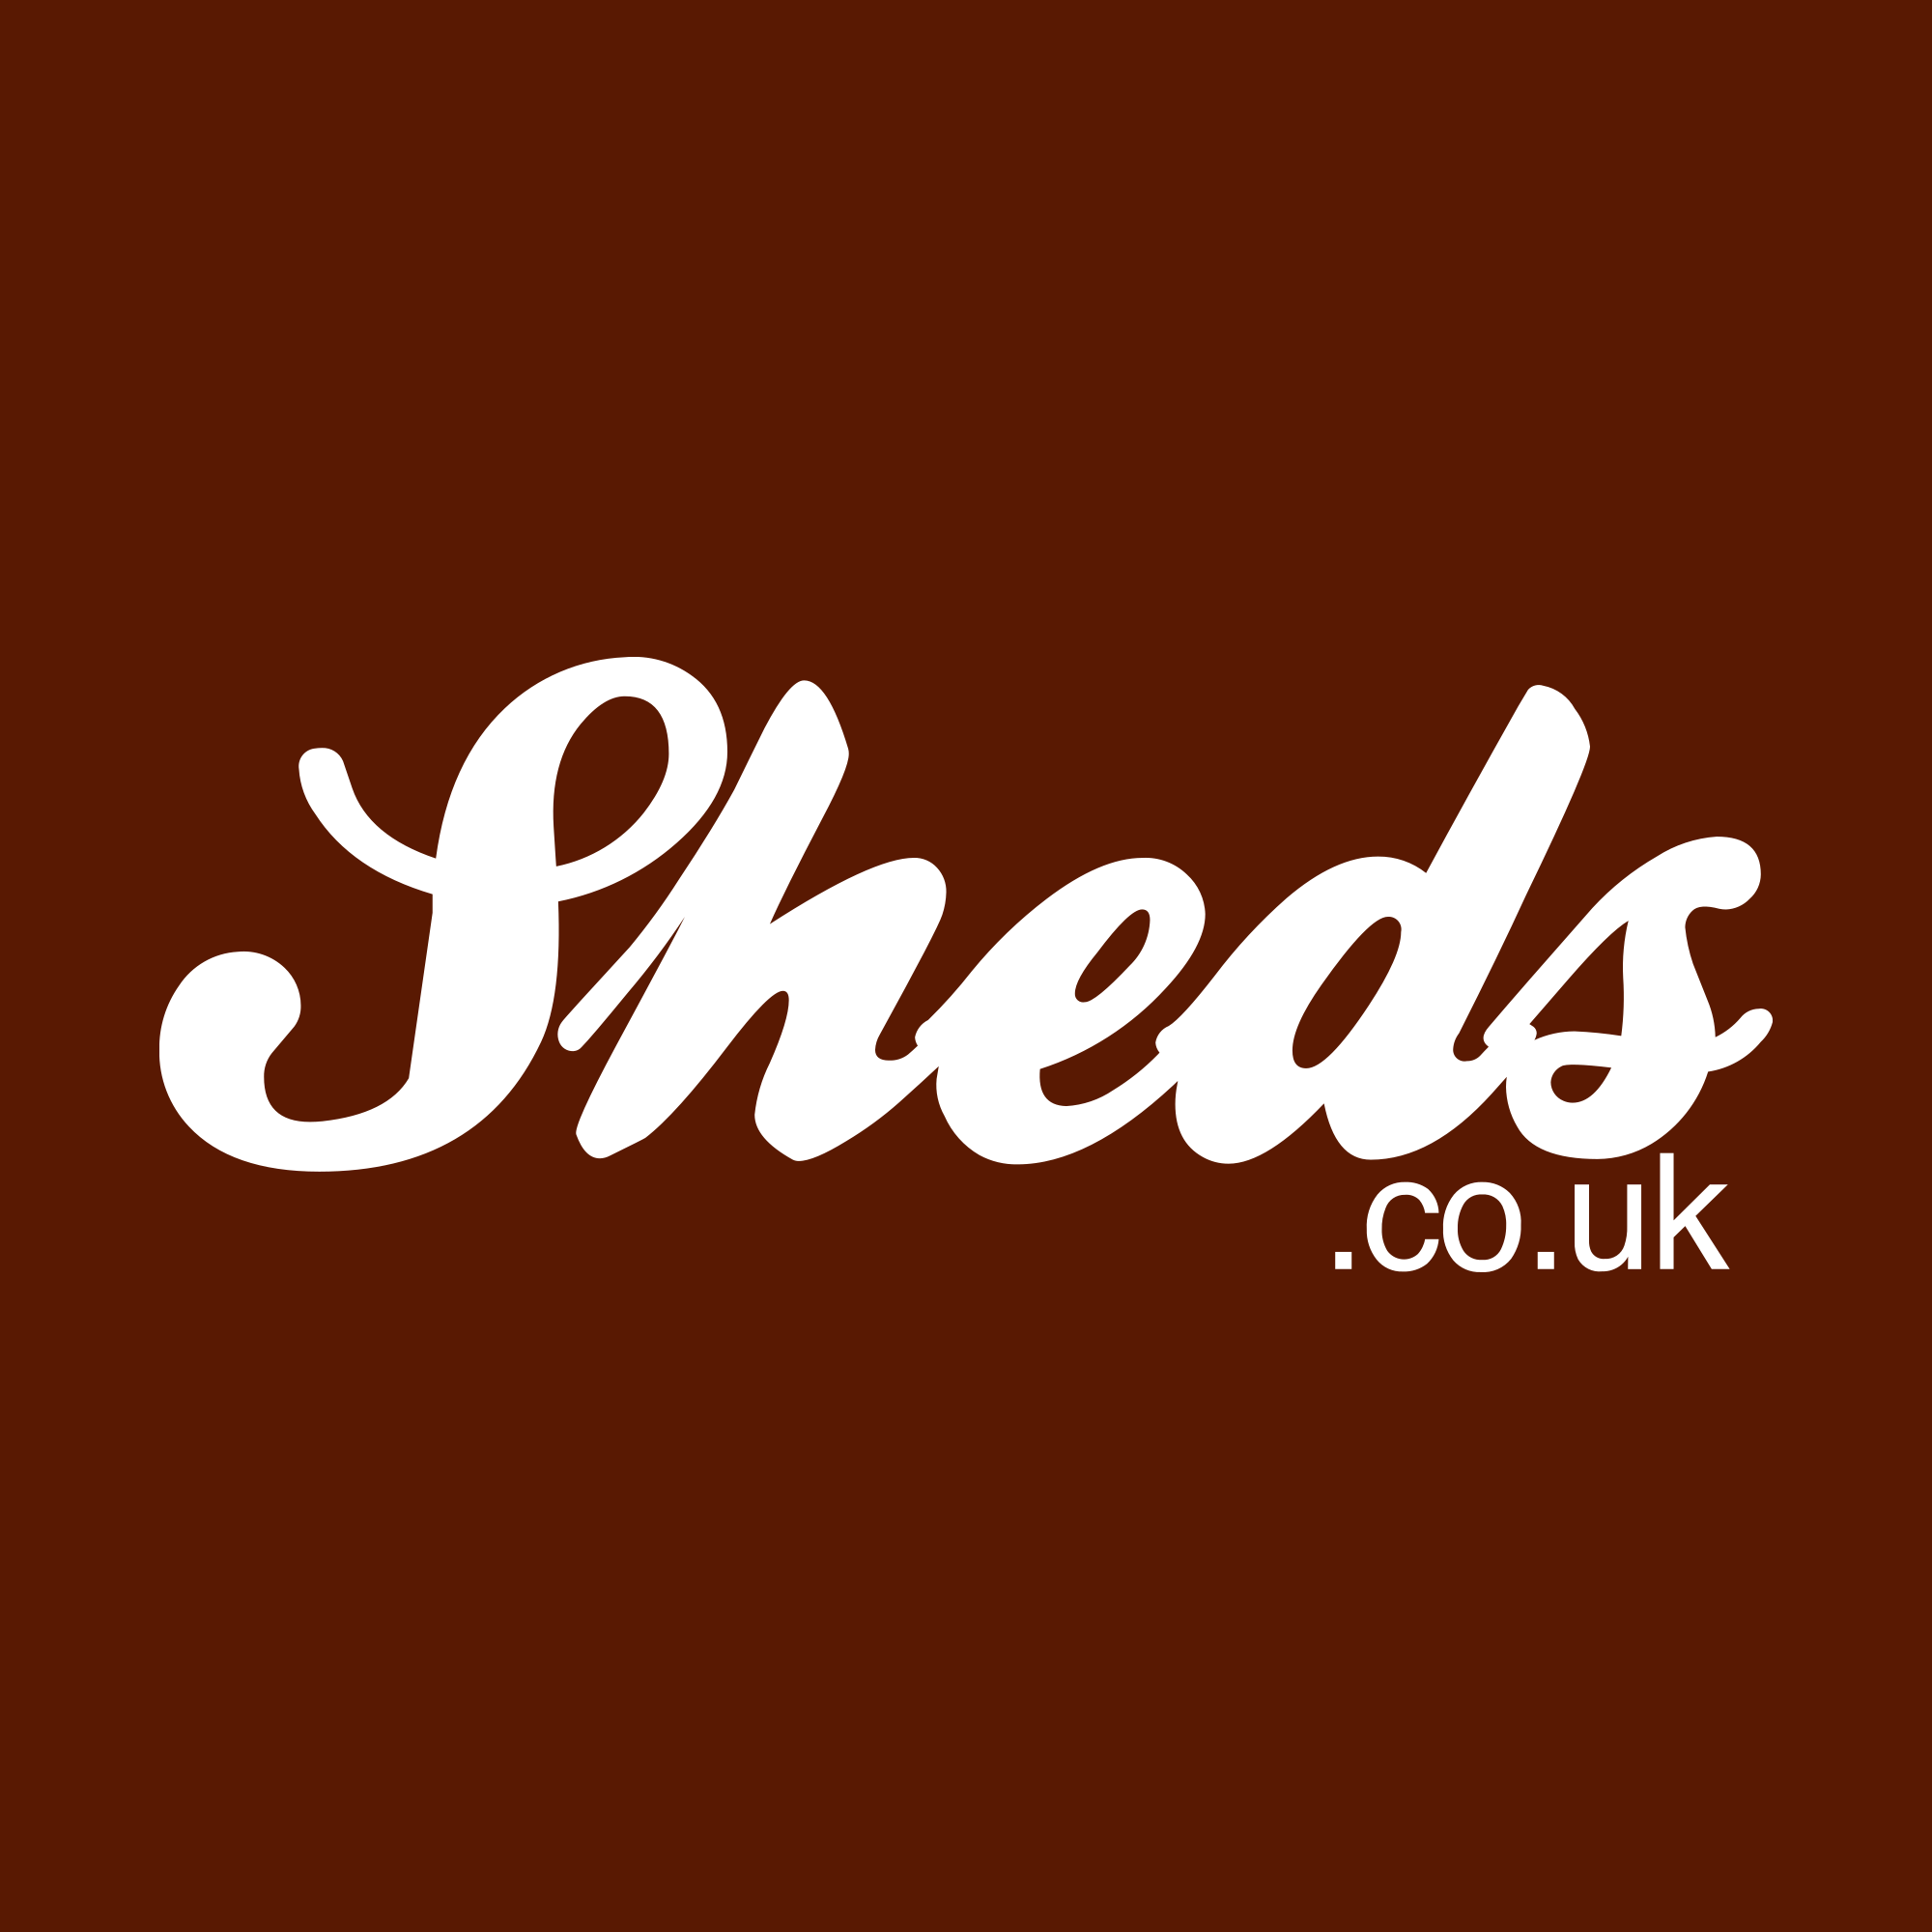 Sheds.co.uk Coupons & Promo Codes